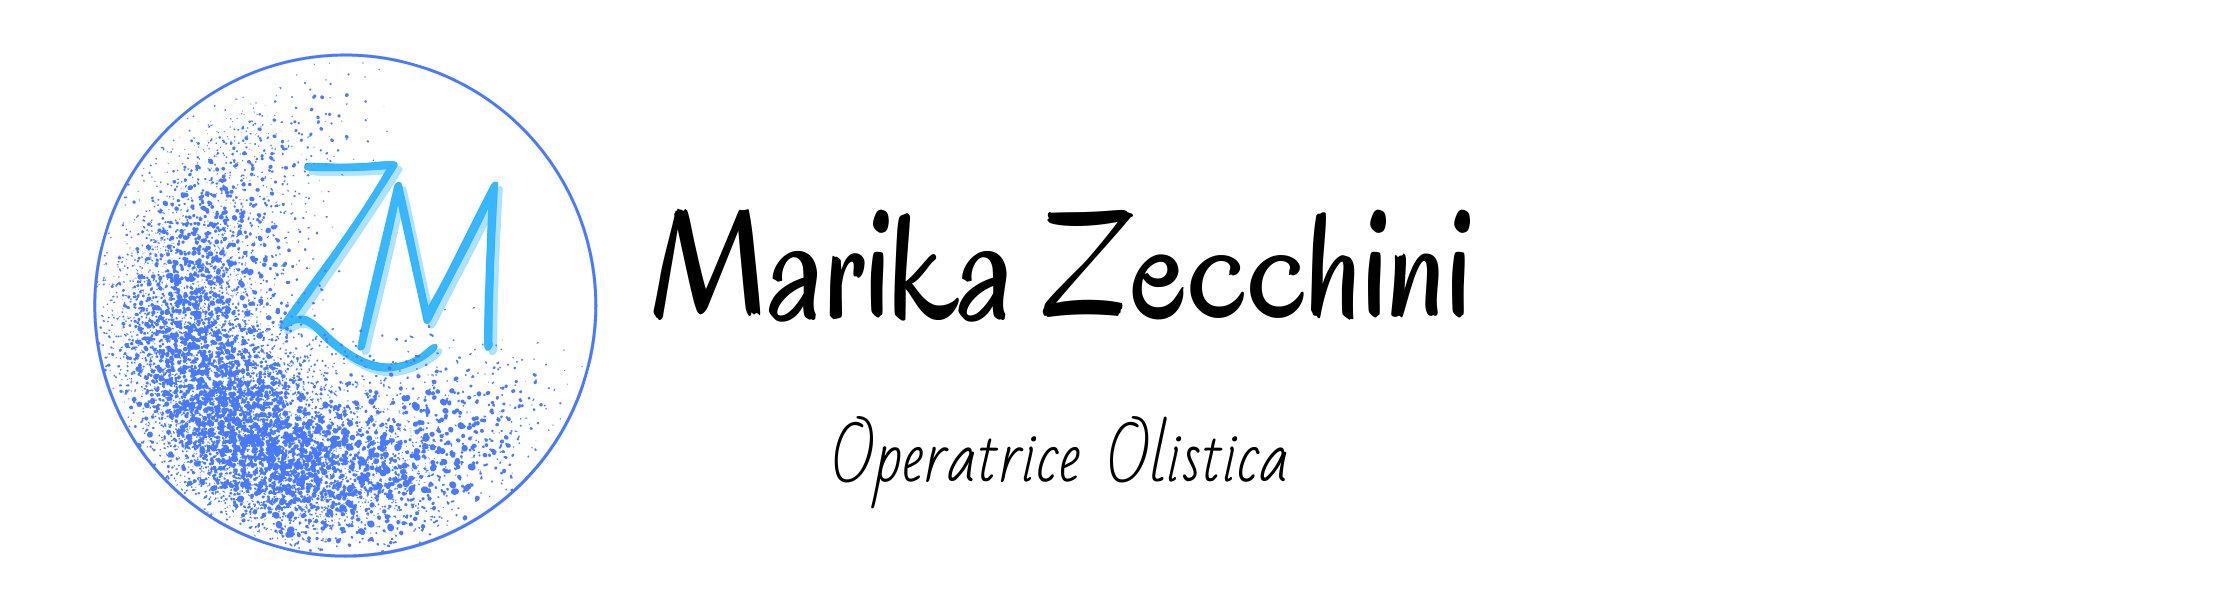 Marika Zecchini Operatrice Olistica